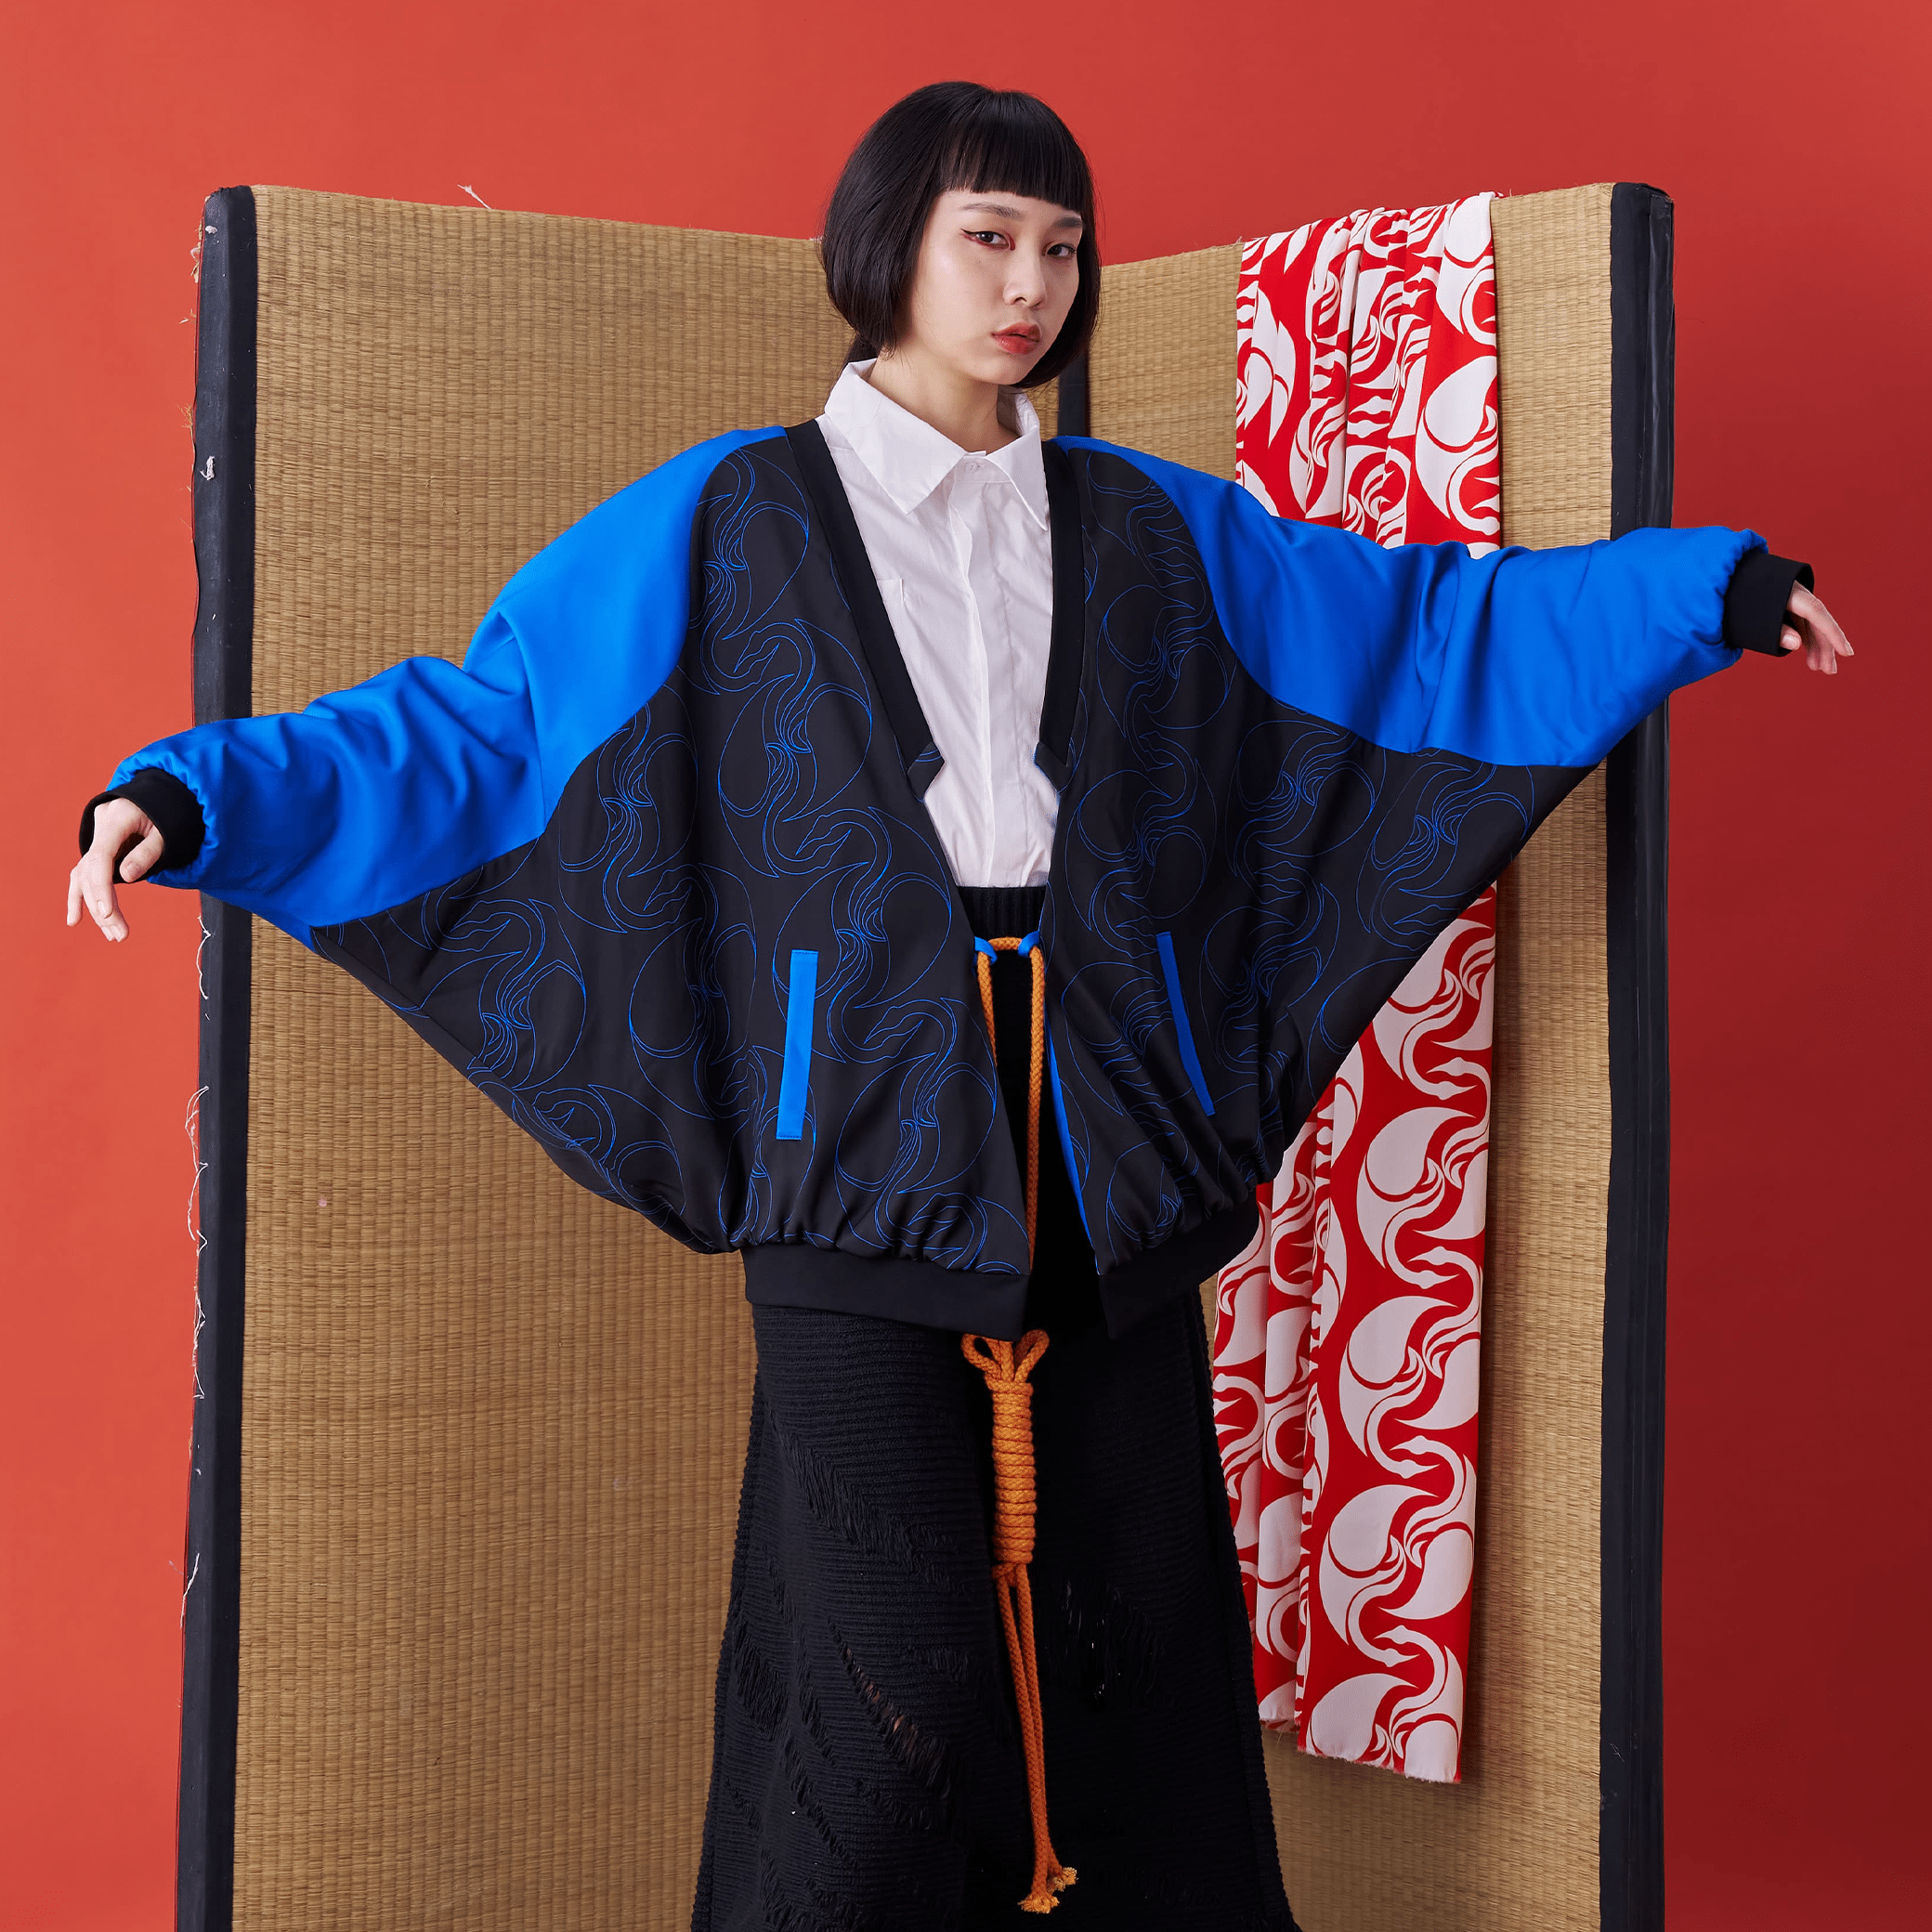 Deconstructed Japanese Kimono-inspired Baseball Jacket - Avant Gardist